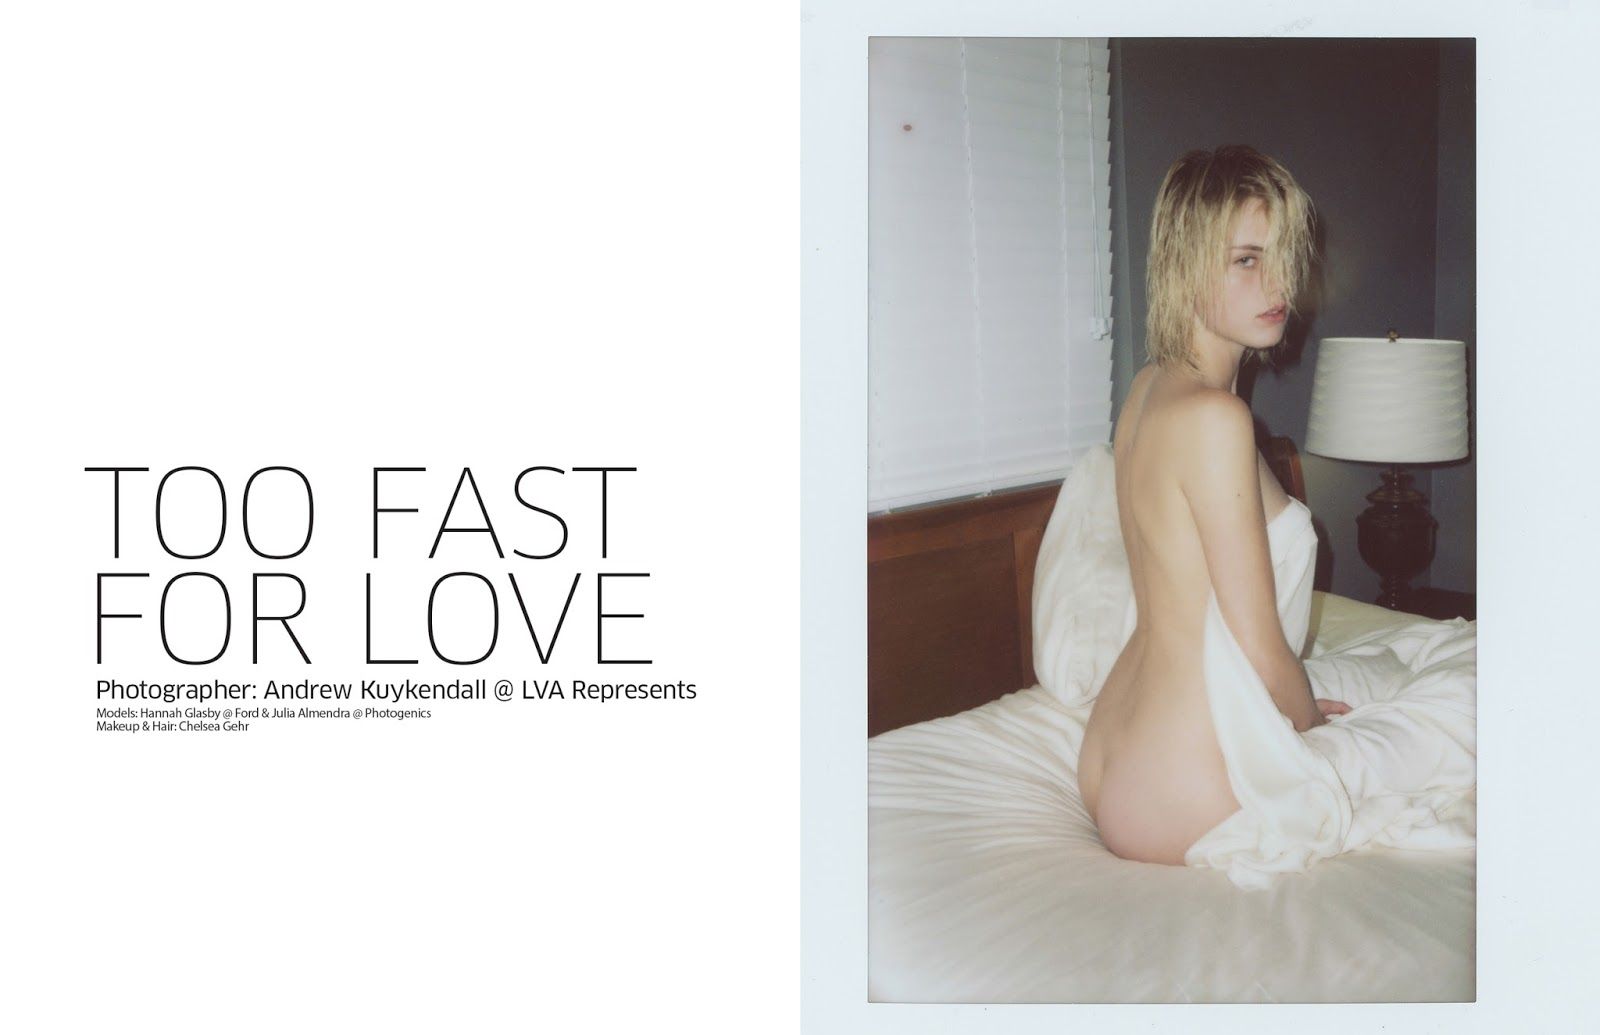 Topless pics of Hannah Glasby &amp; Julia Almendra